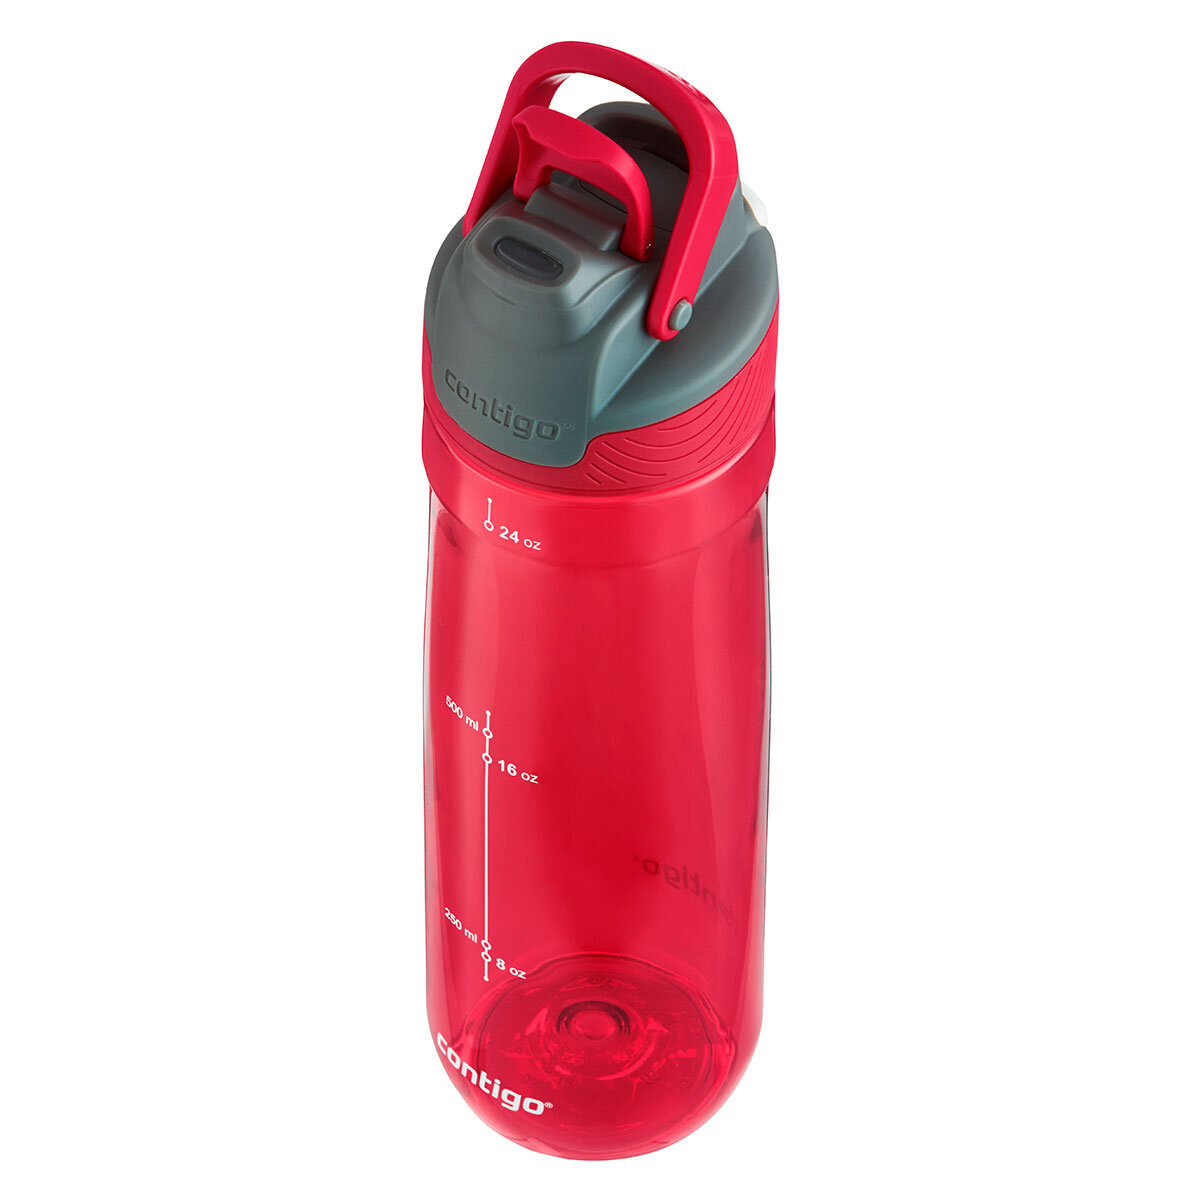 Contigo Autoseal Plastic Water Bottle, Assorted, 709-mL